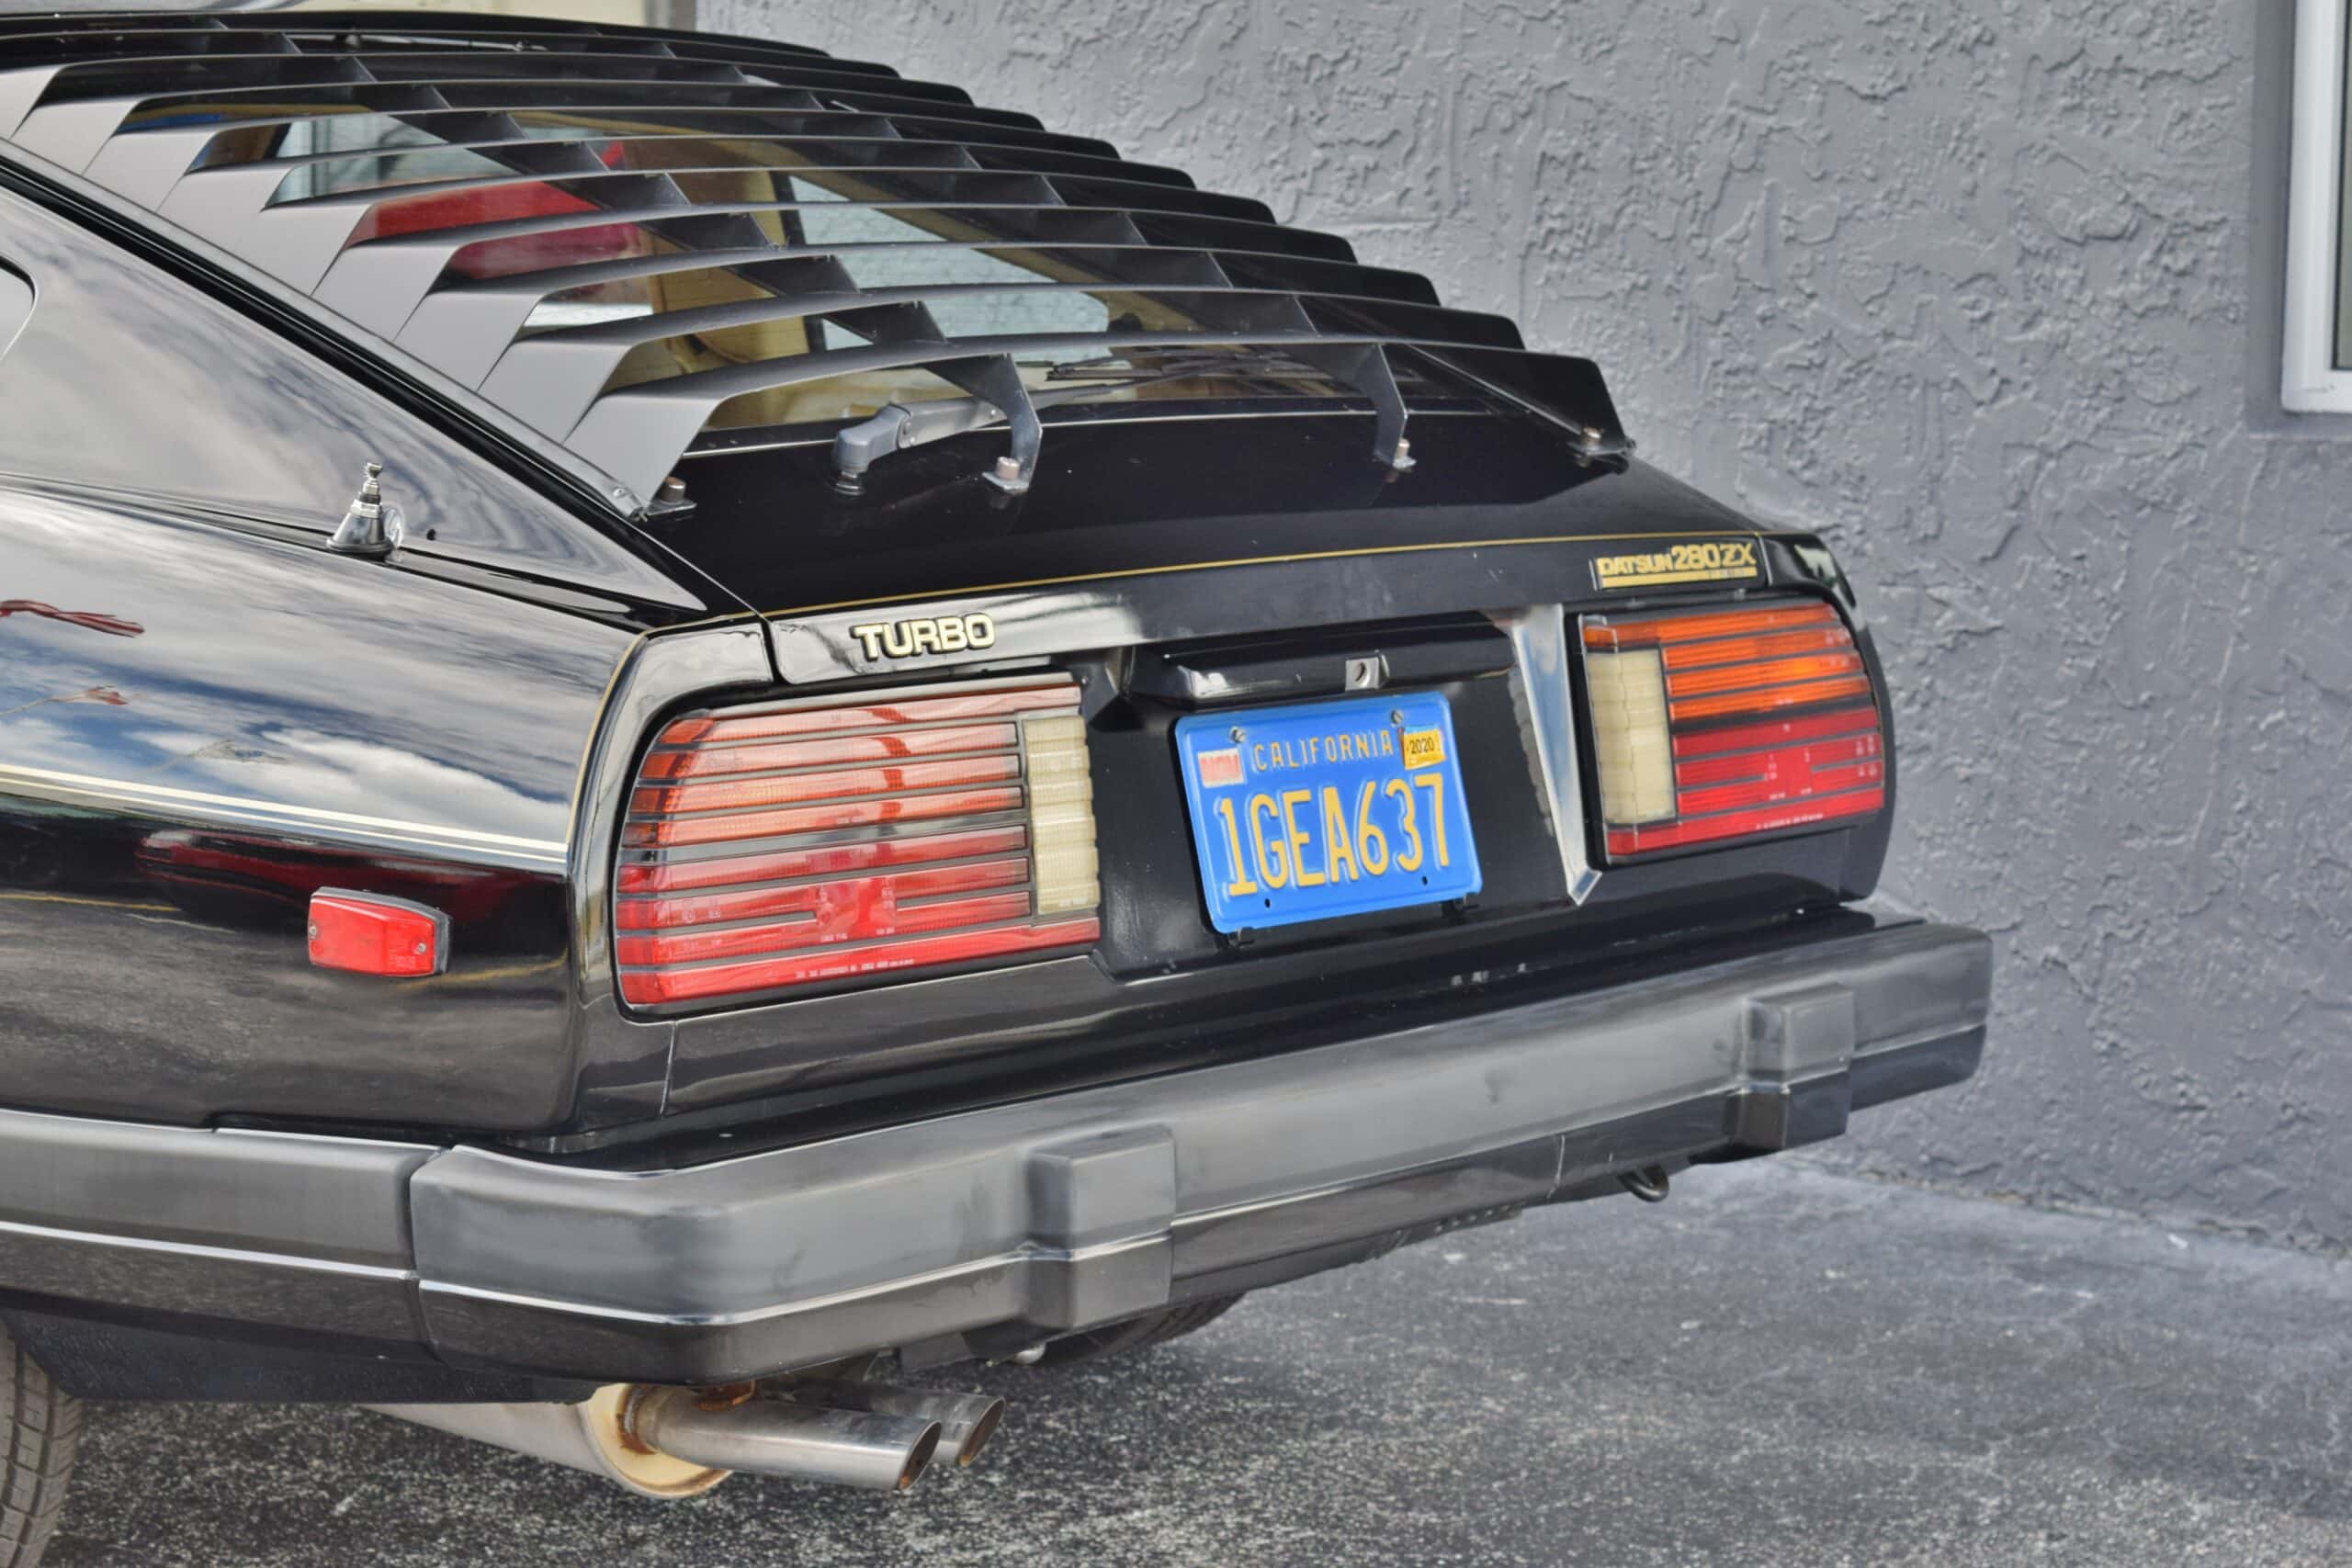 1982 Datsun Z-Series 280ZX 1 Owner-California Car-100% Stock-Original Window Sticker-Full Service History